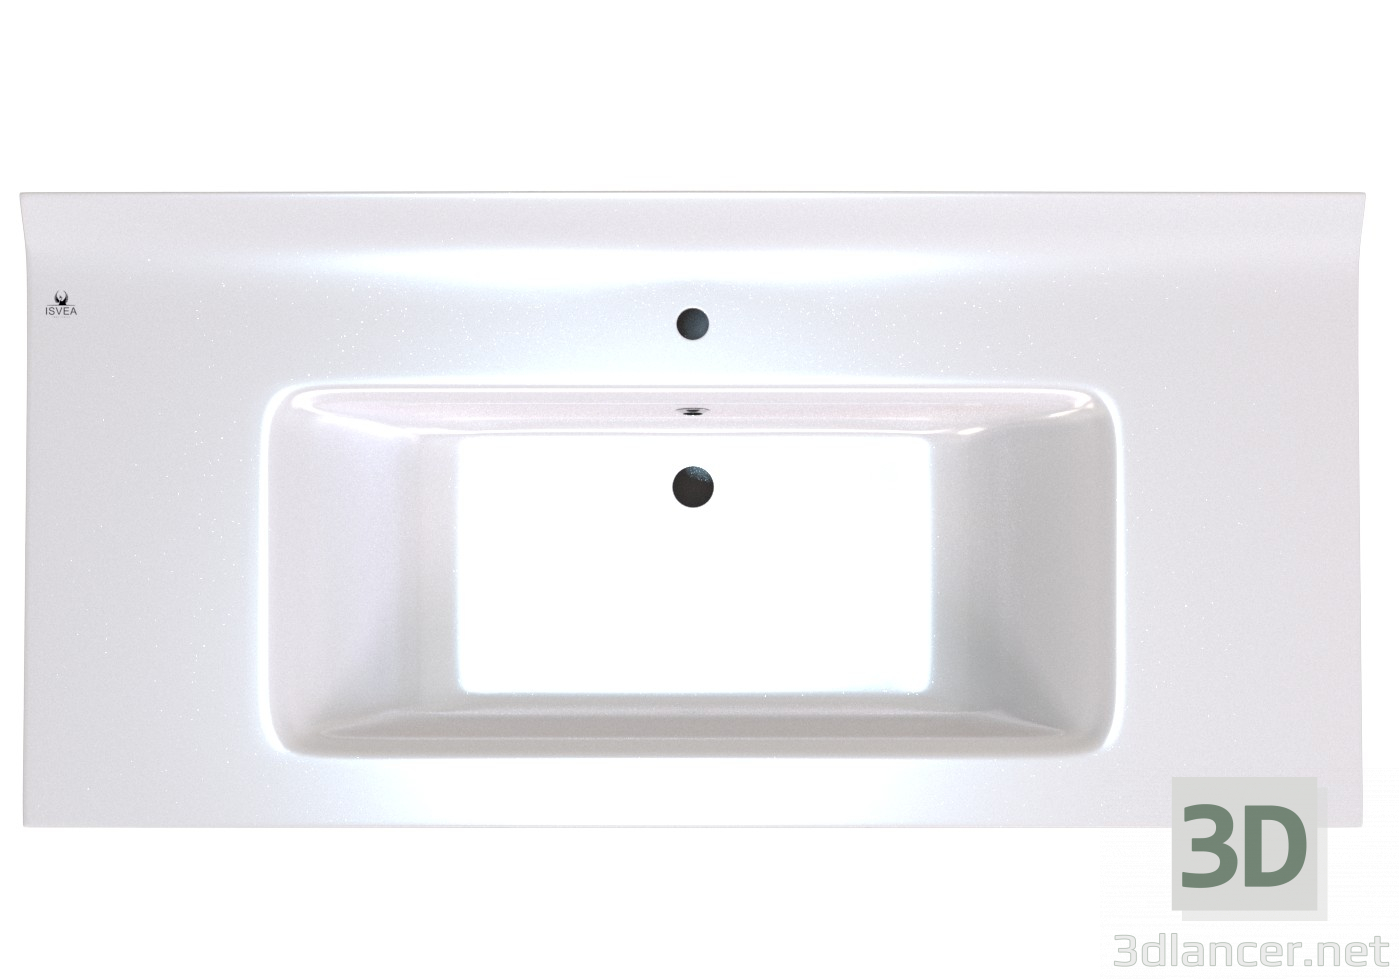 3d Washbasin model buy - render